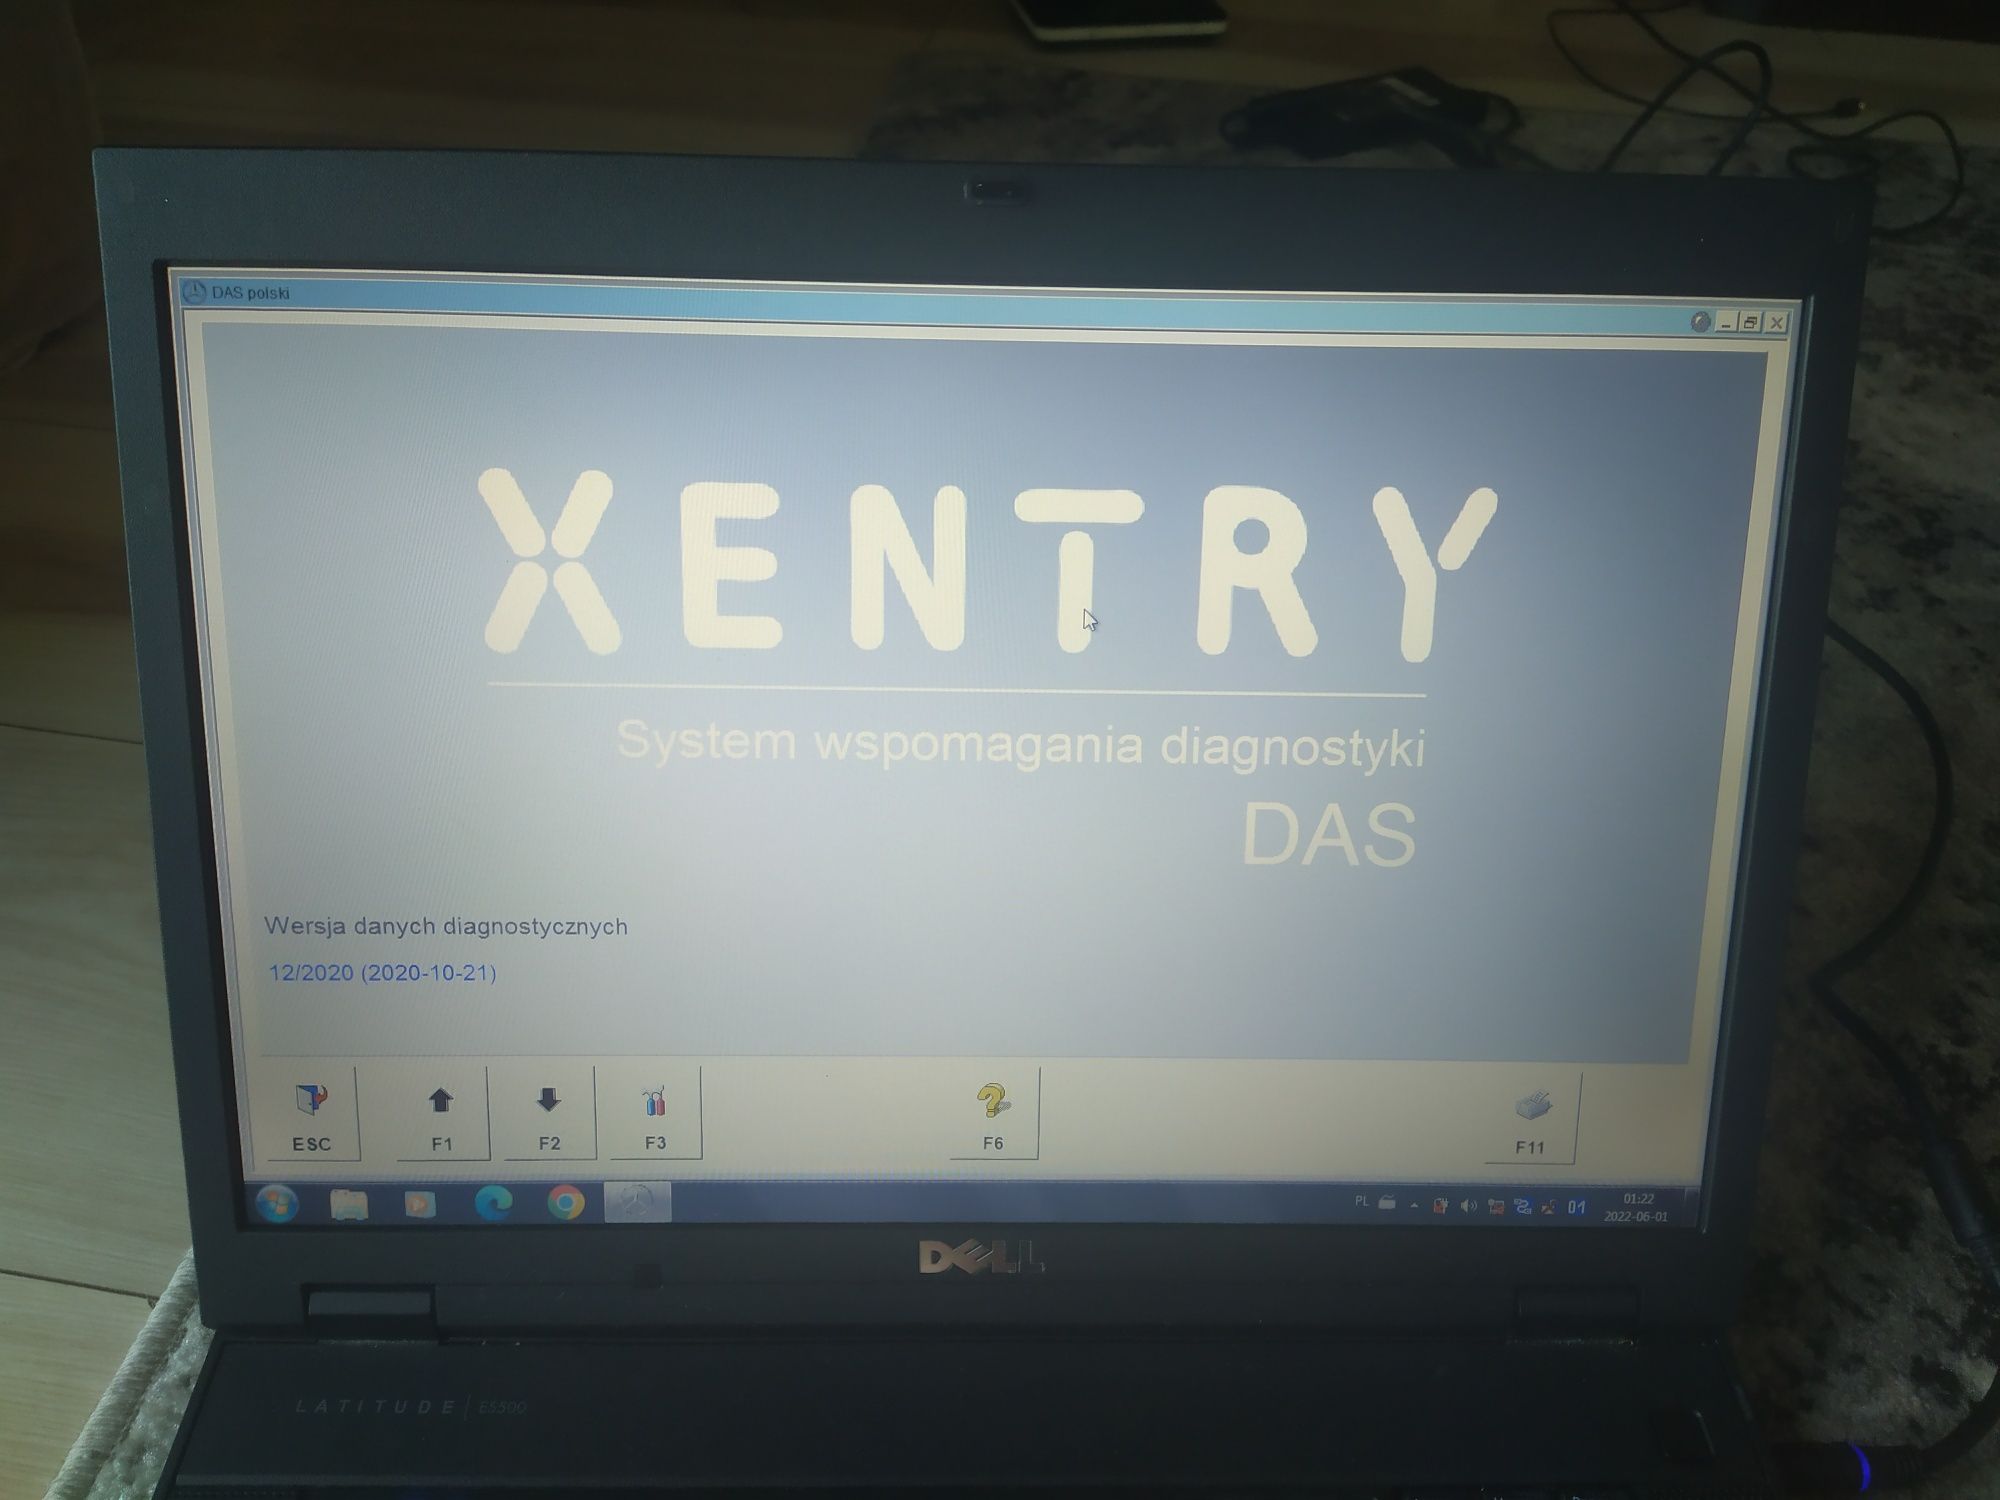 Laptop diagnostyczny Dell E5500 Xentry C4 star diagnosis 2020r